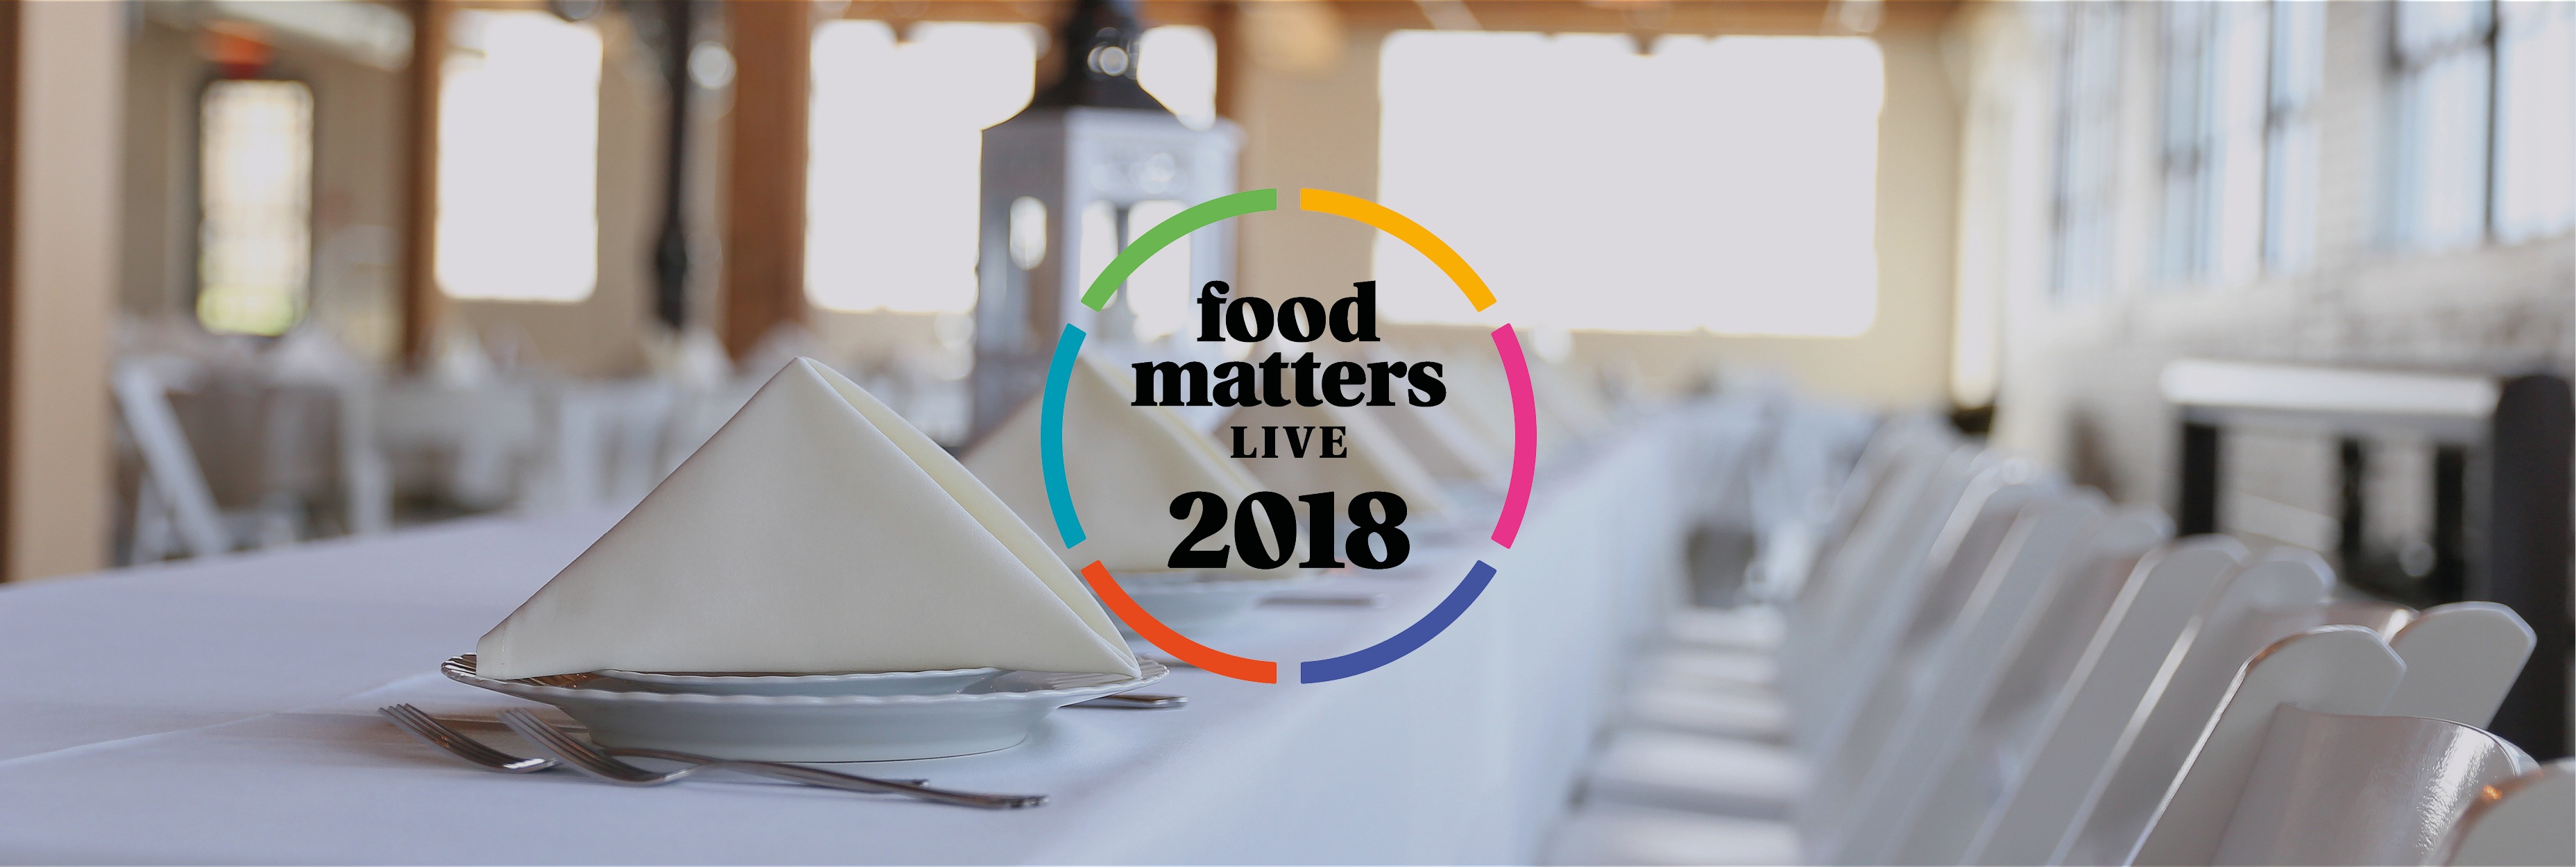 Food Matters Live 2018.jpg